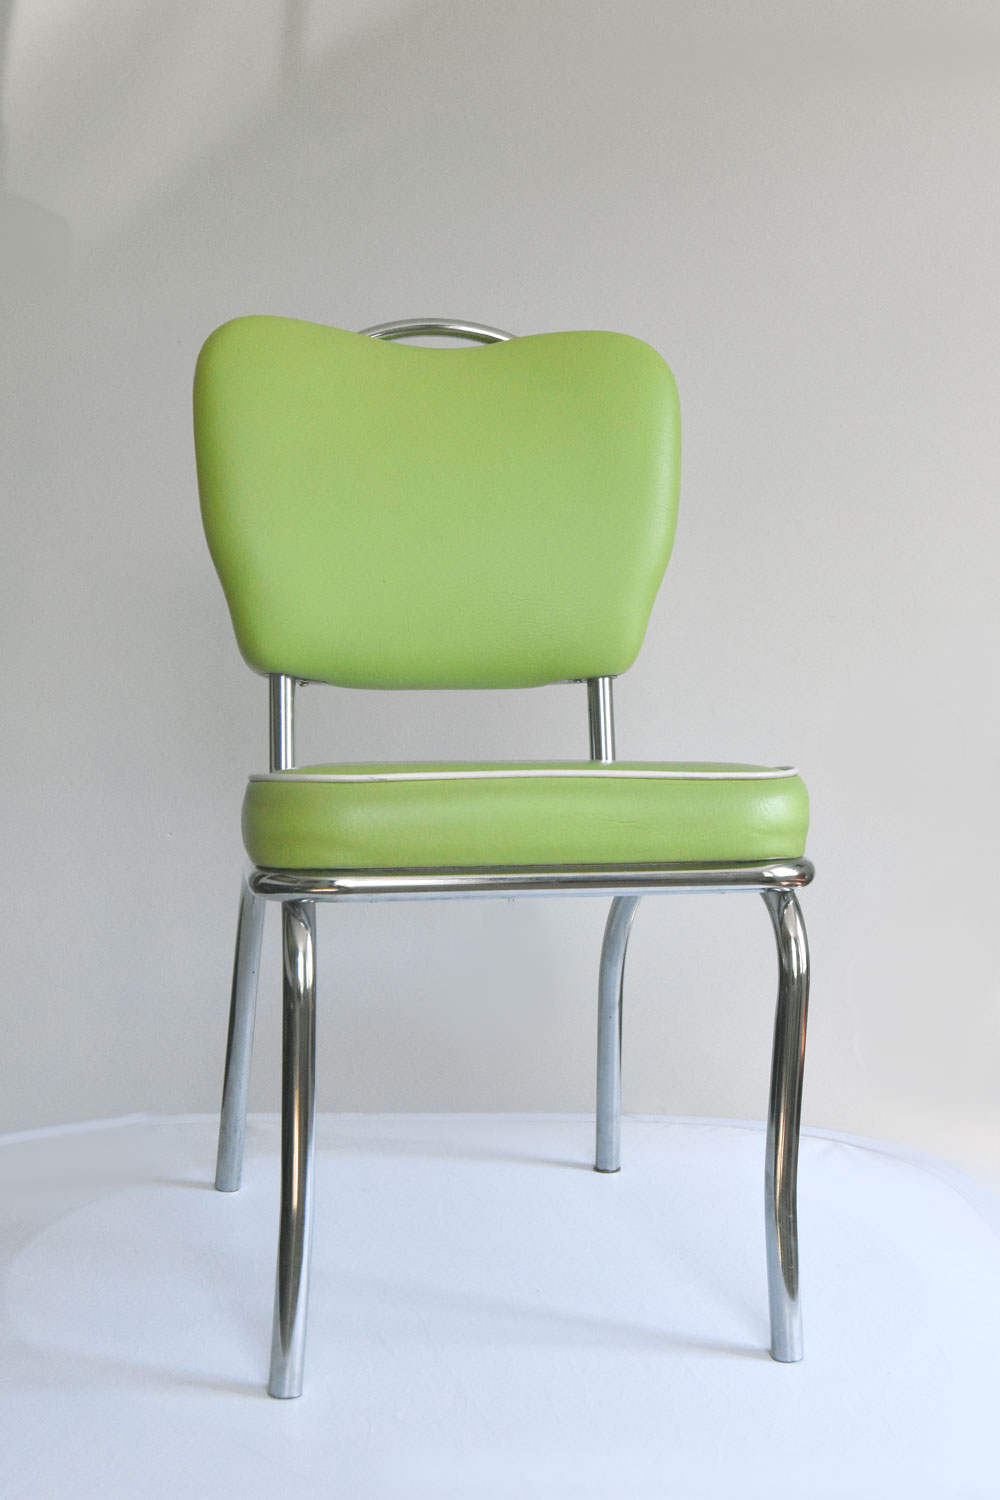 1950's Style American Diner vinyl chair